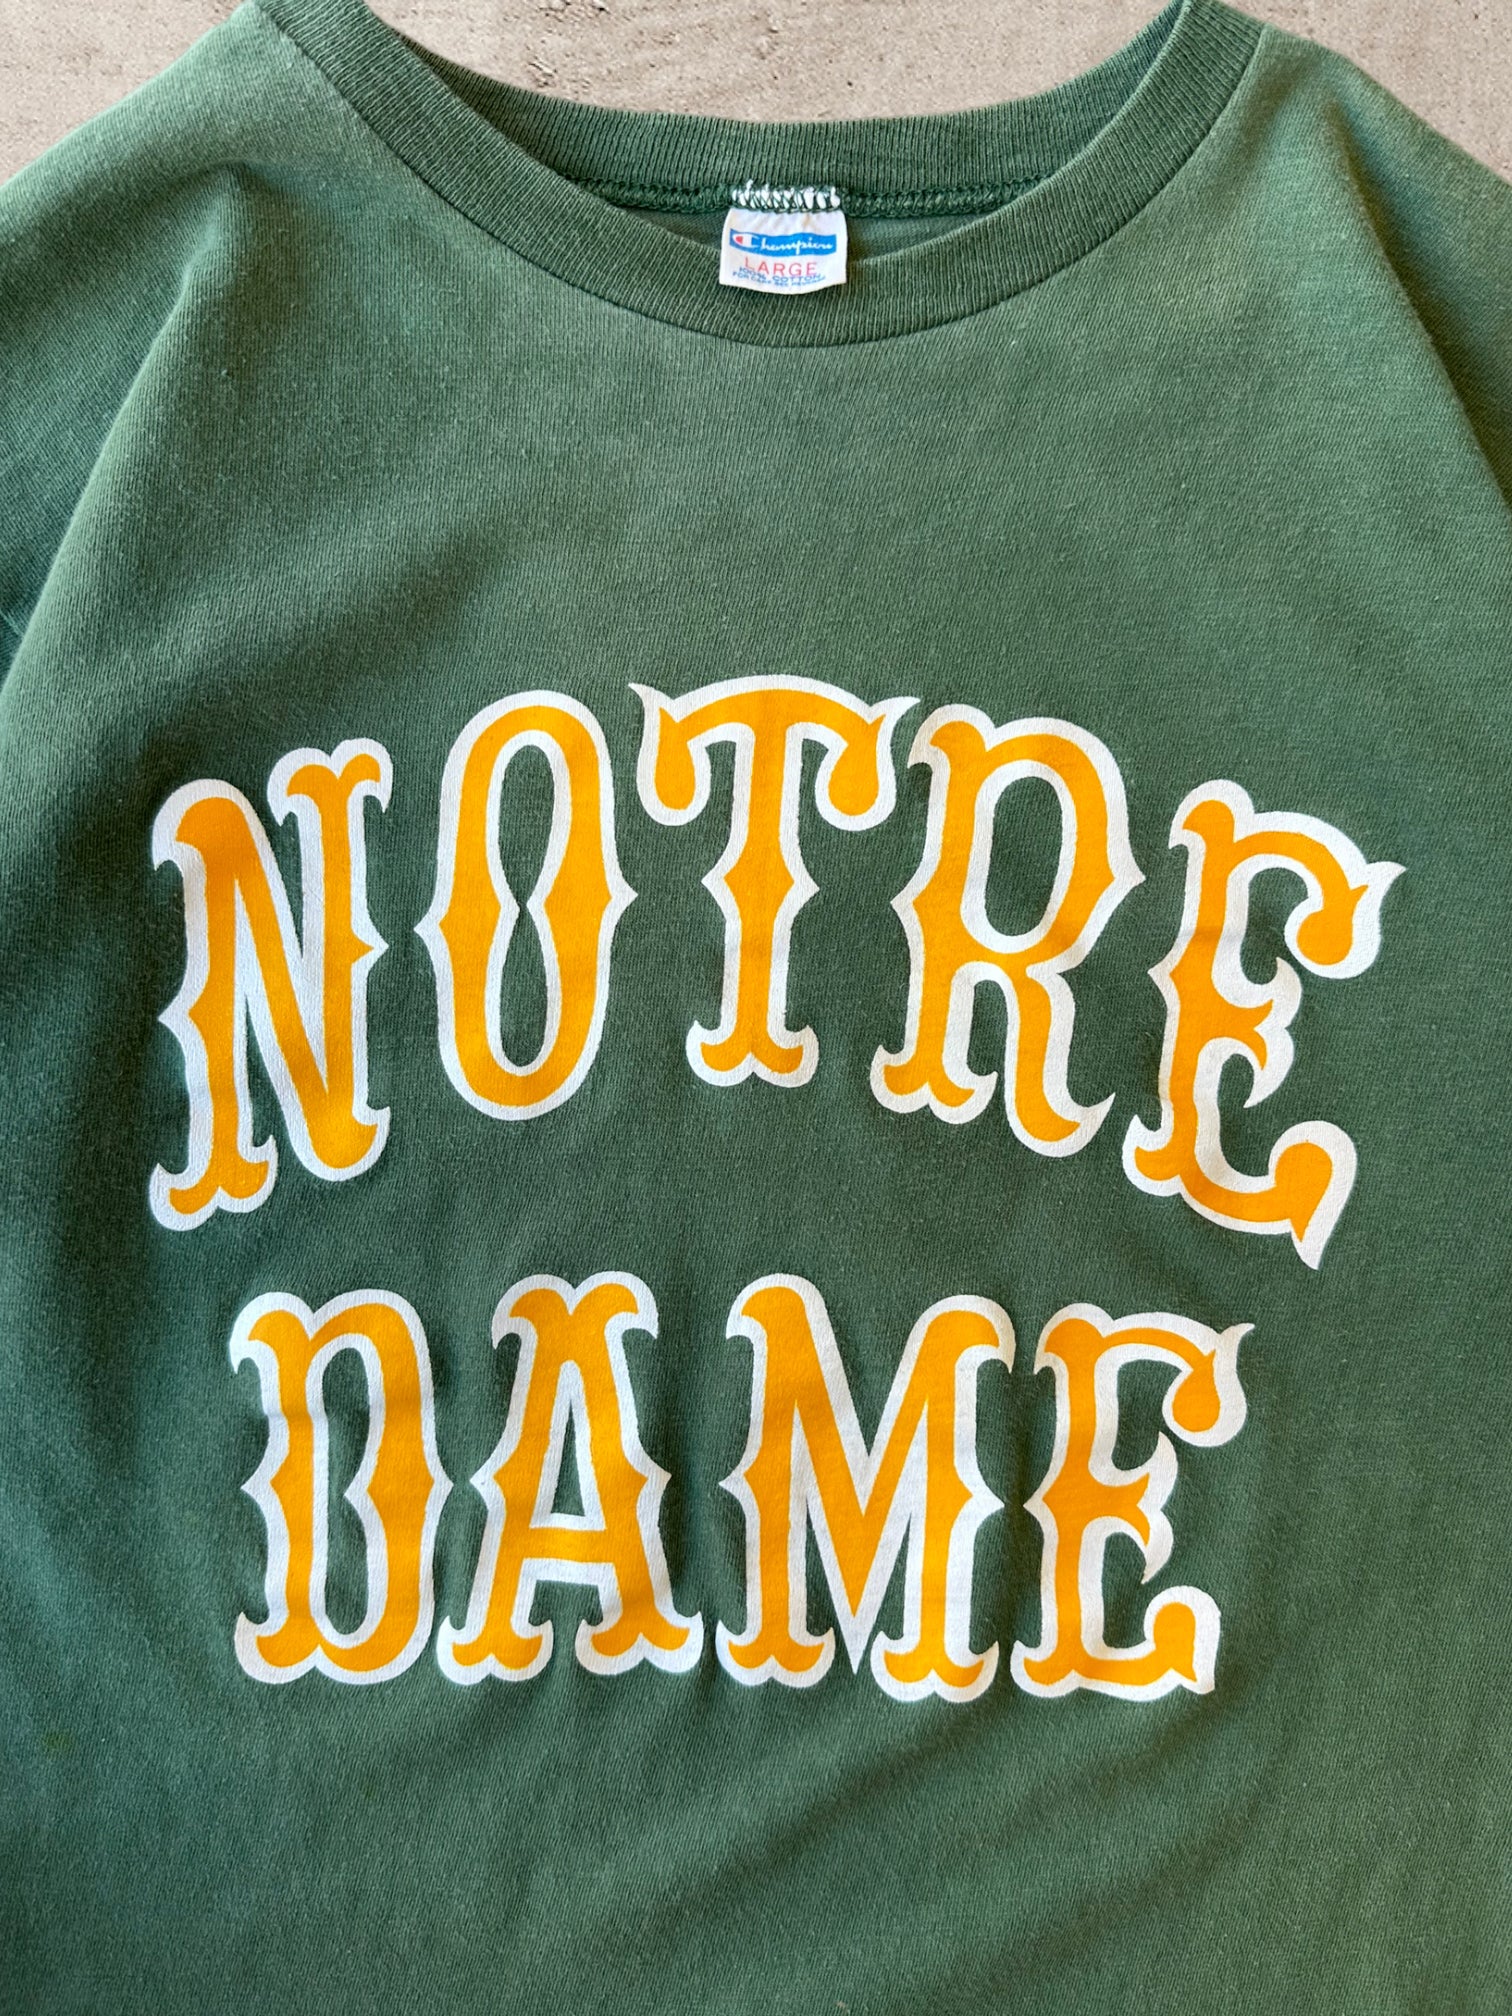 80s Notre Dame University Graphic T-Shirt - Medium